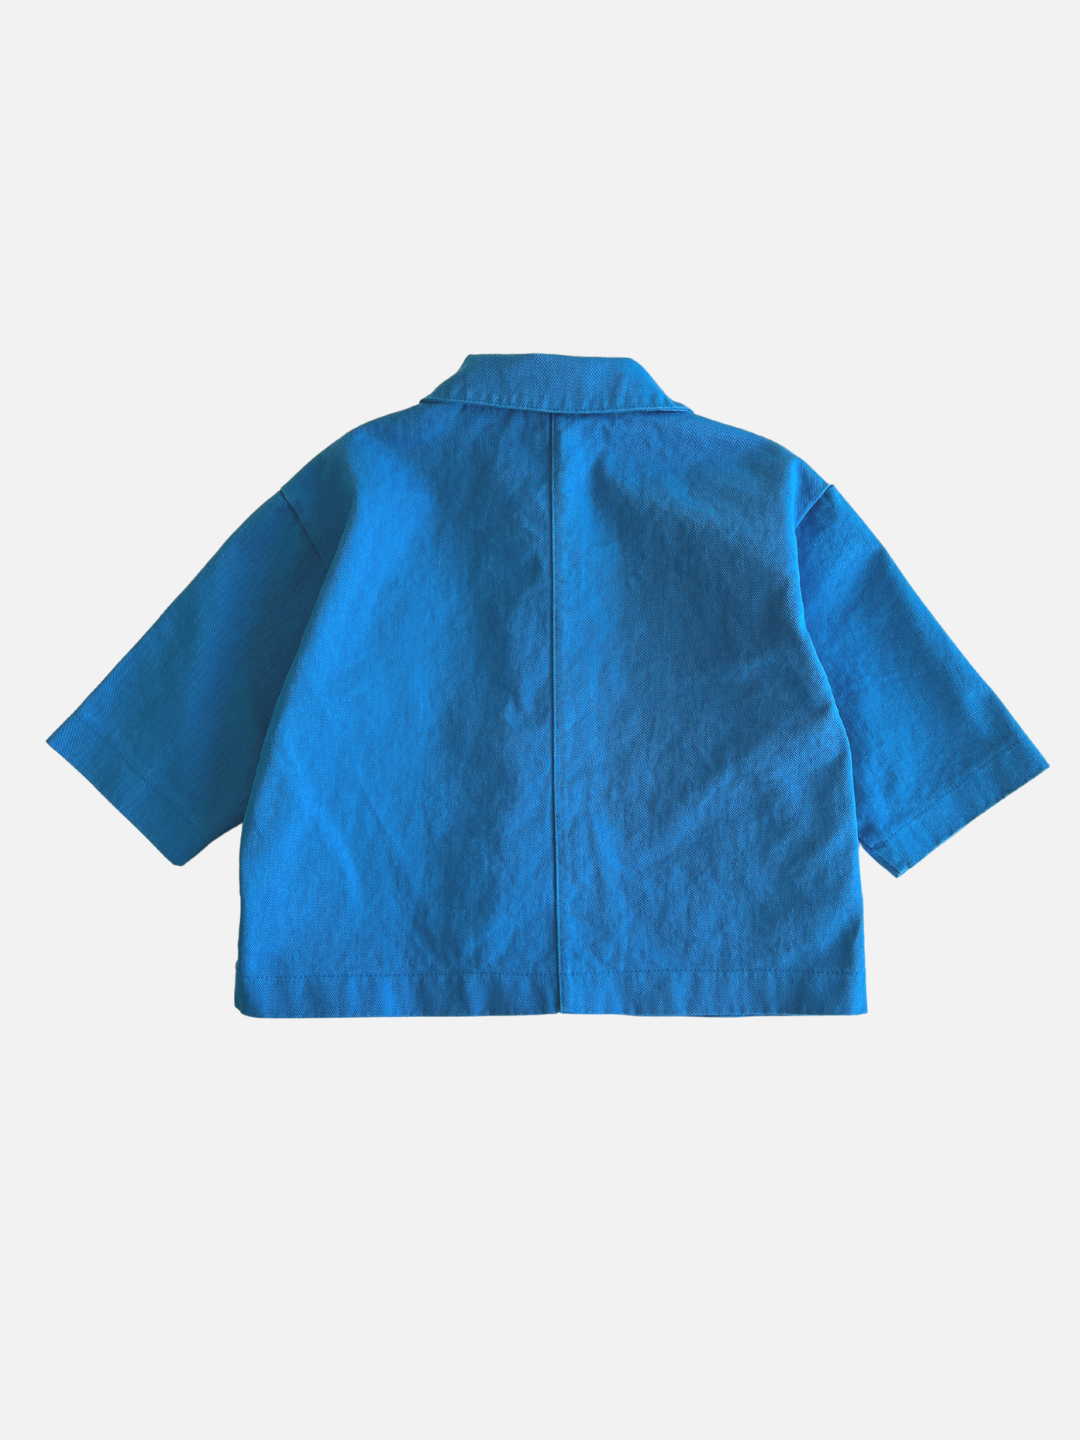 Blue | A kids' jacket in sky blue, back view